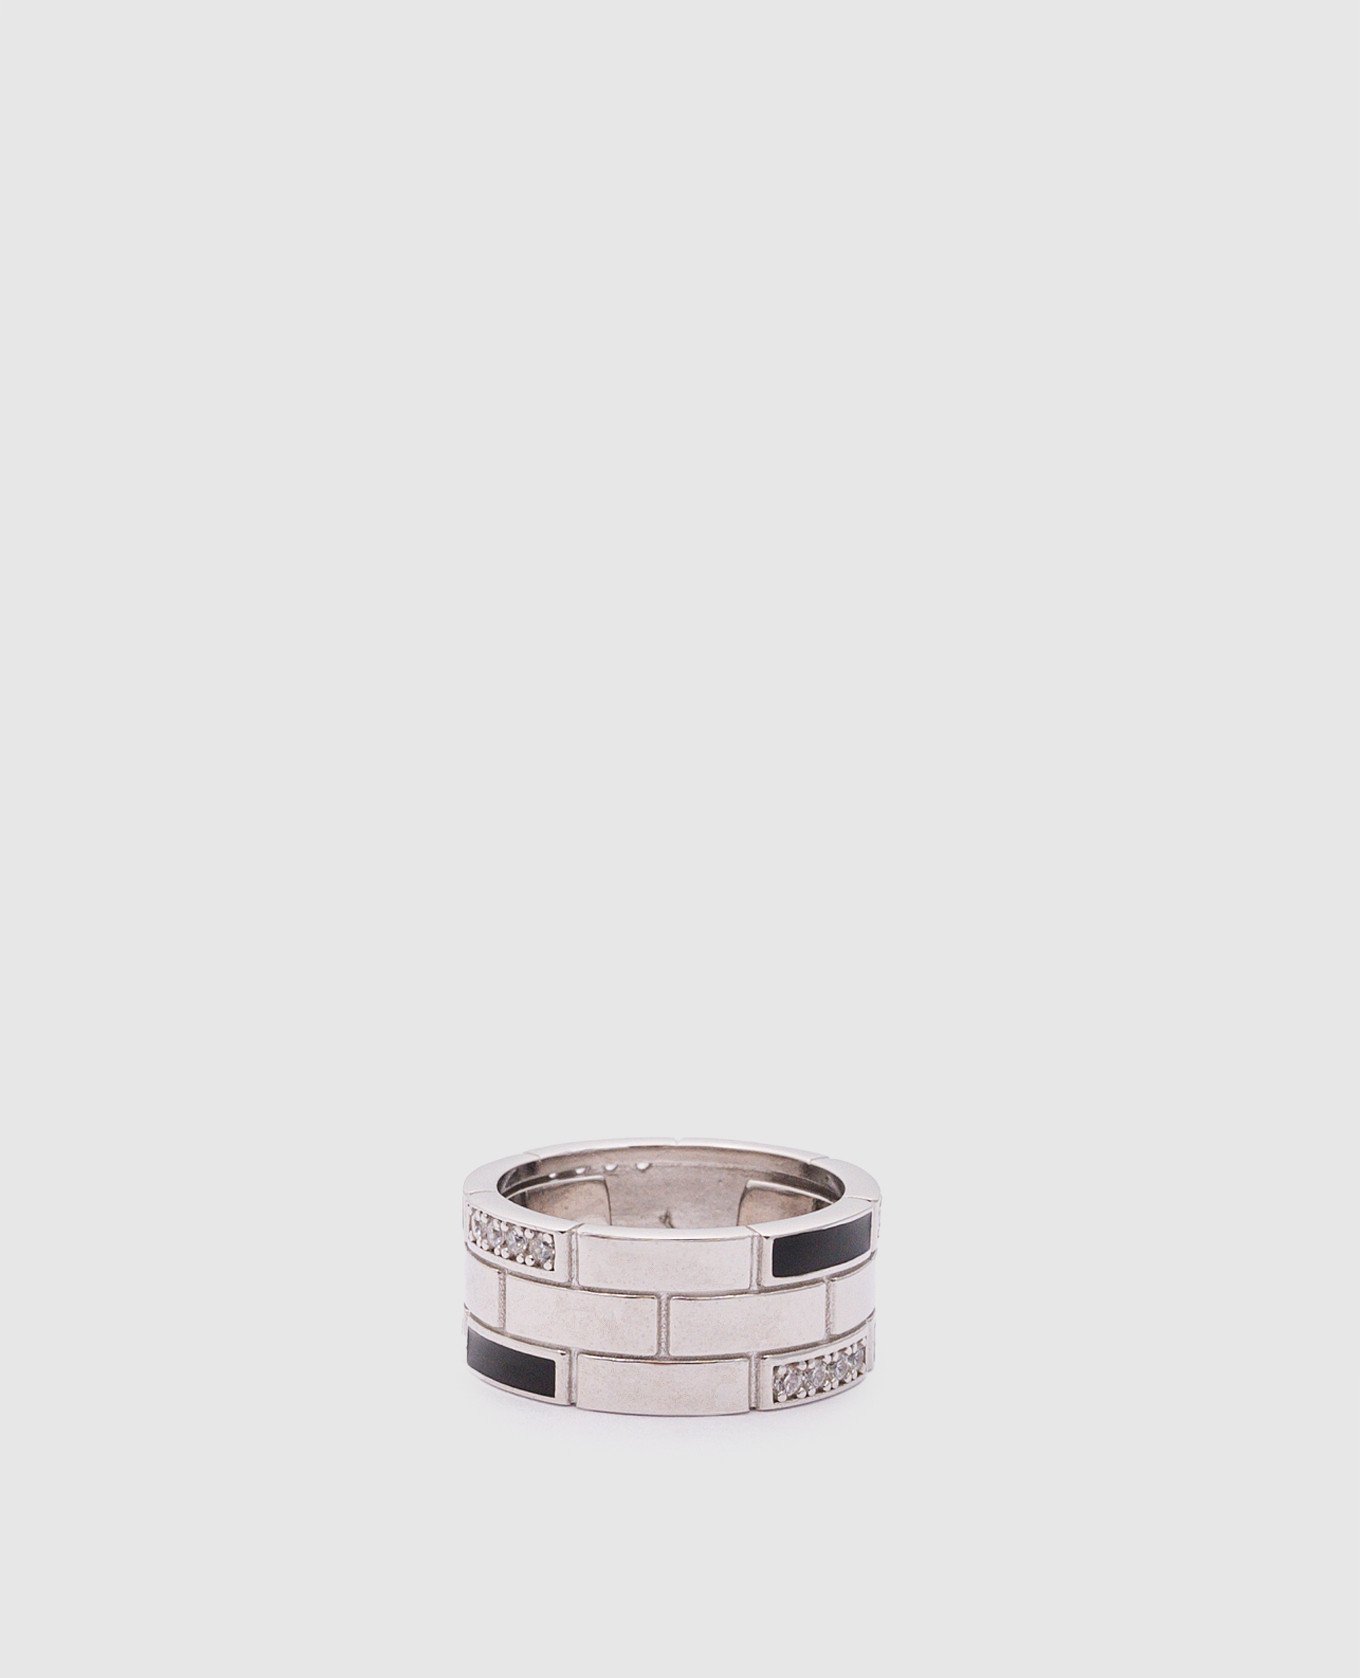 Silver ring with zirconium